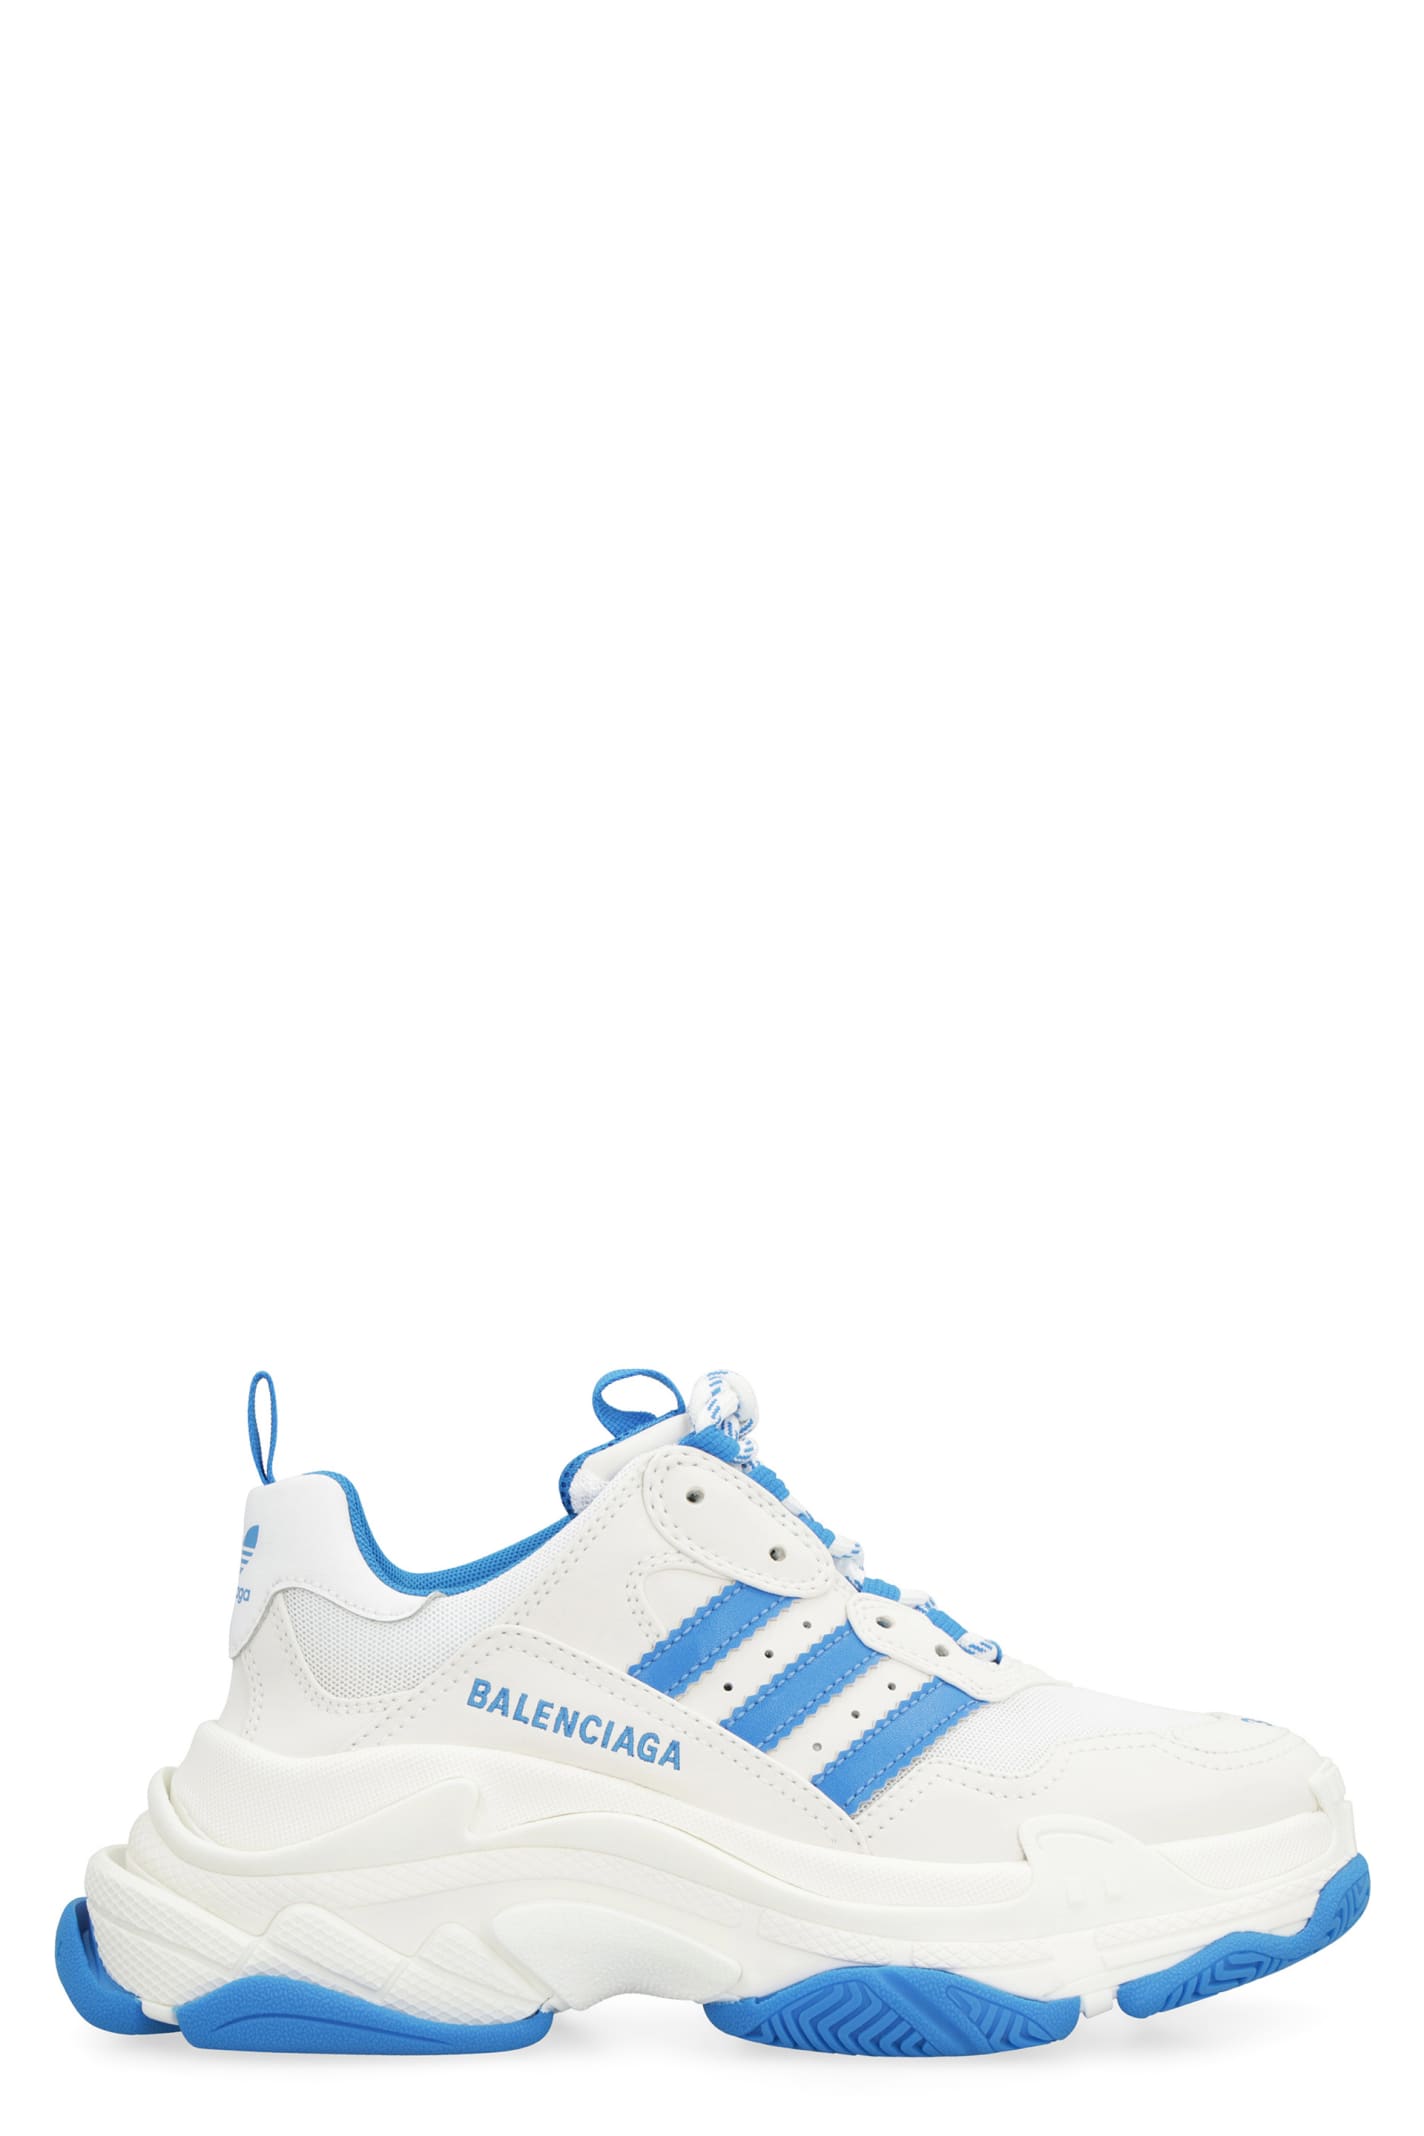 Balenciaga X Adidas - Triple S Sneakers